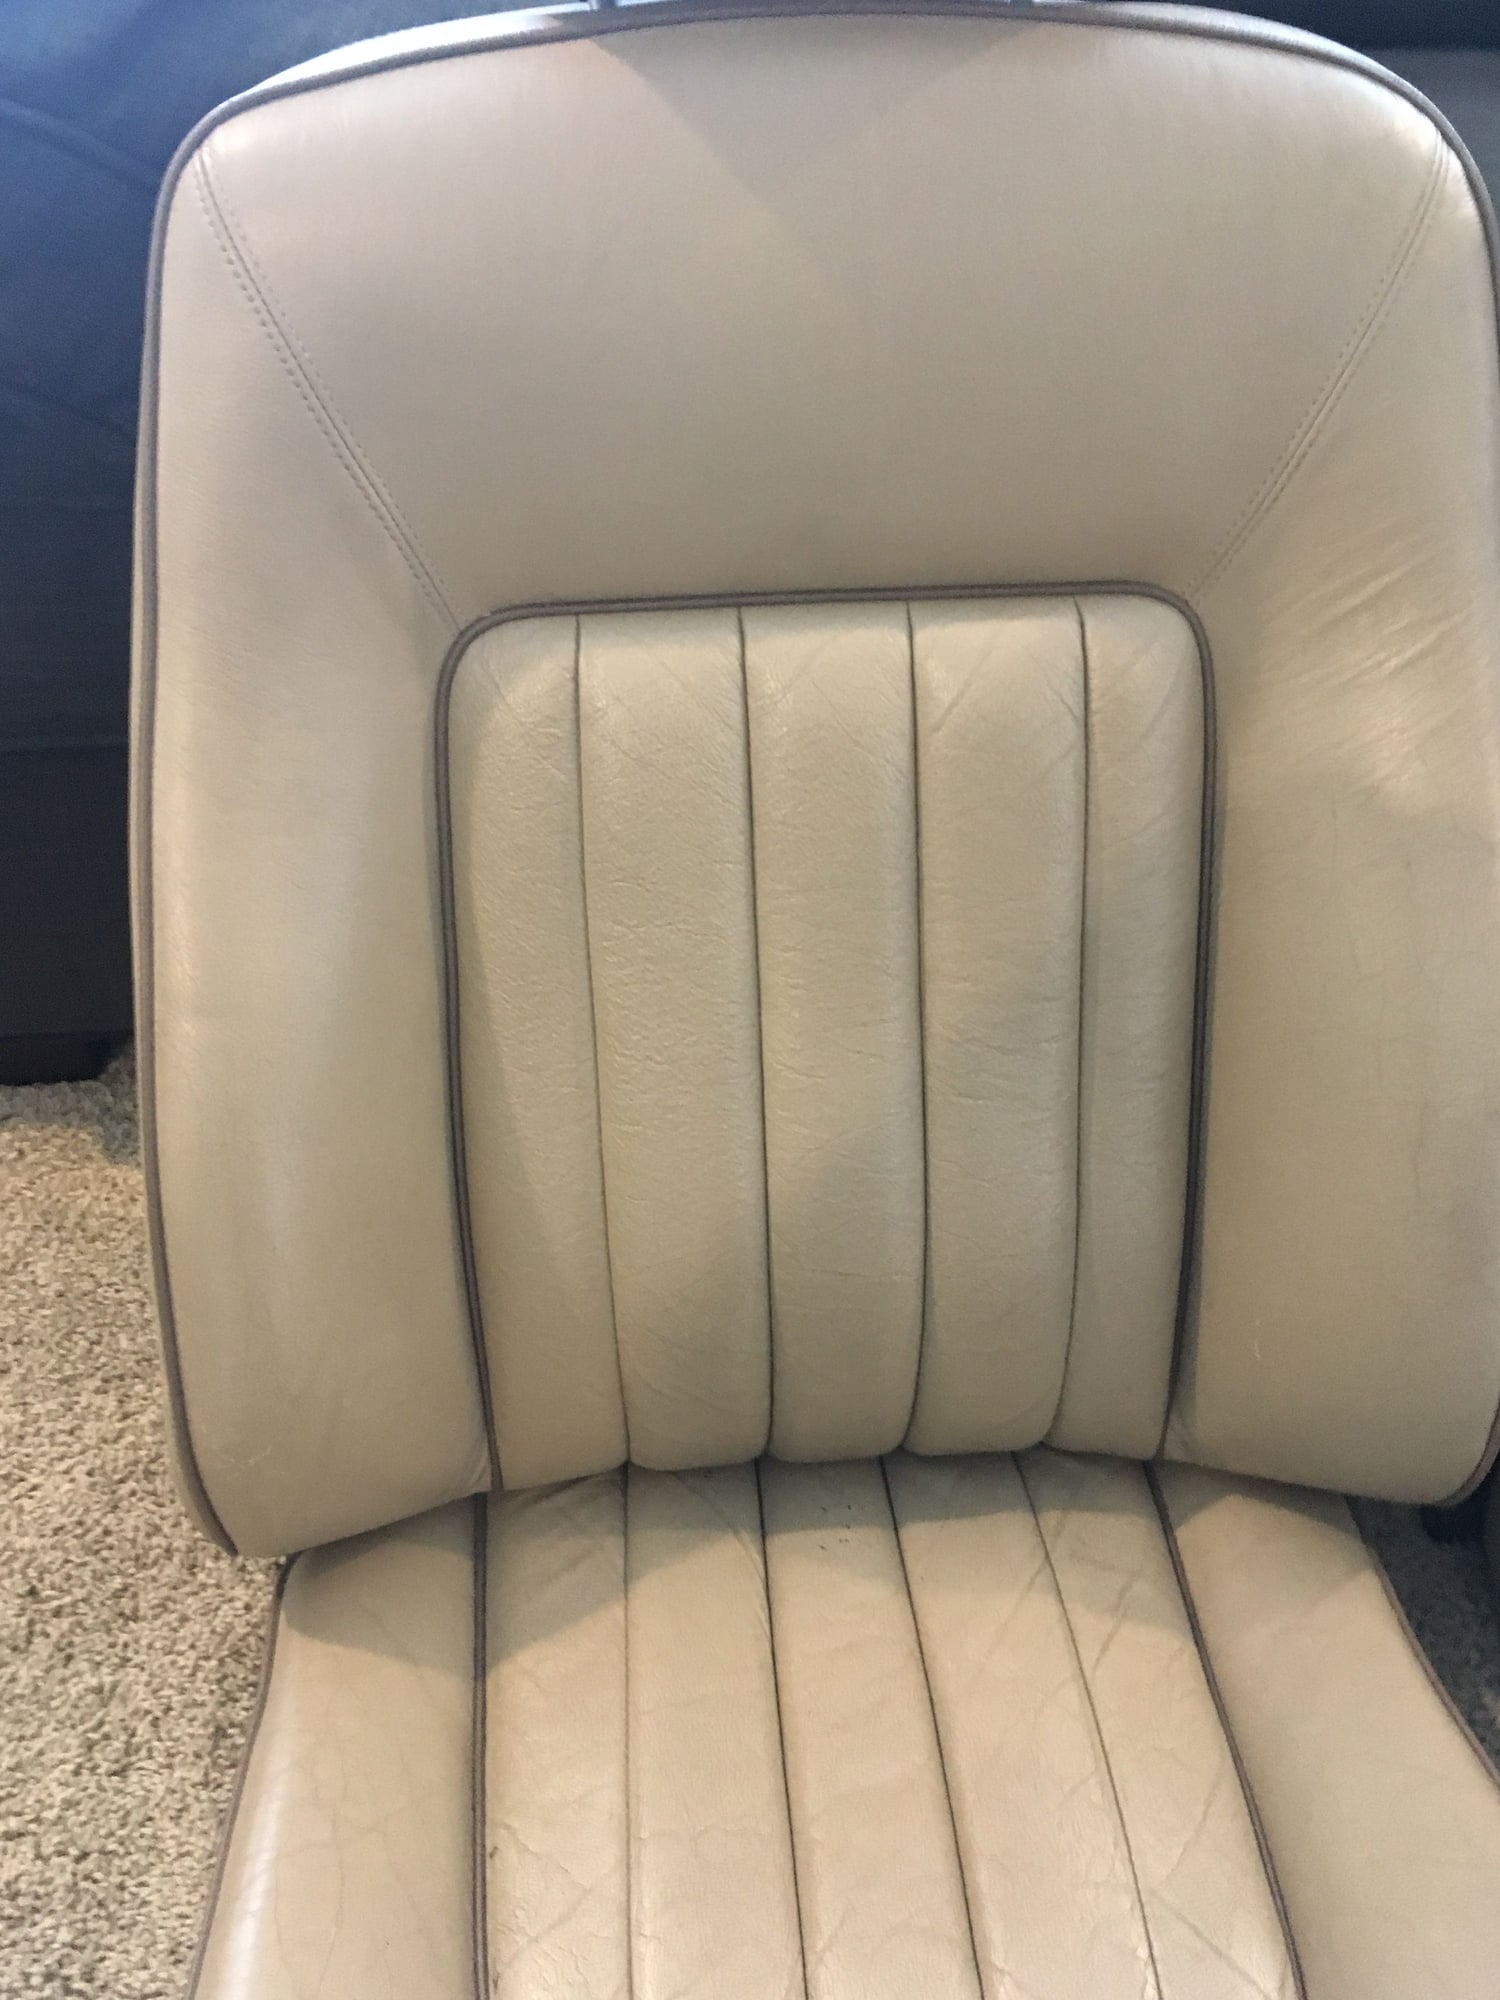 Interior/Upholstery - Selling Seats, door panels, interior pieces. 92-94 XJ6 Vanden Plas. Doeskin color. - Used - 1992 to 1994 Jaguar XJ6 - 1992 to 1994 Jaguar XJ12 - Atlanta, GA 30319, United States